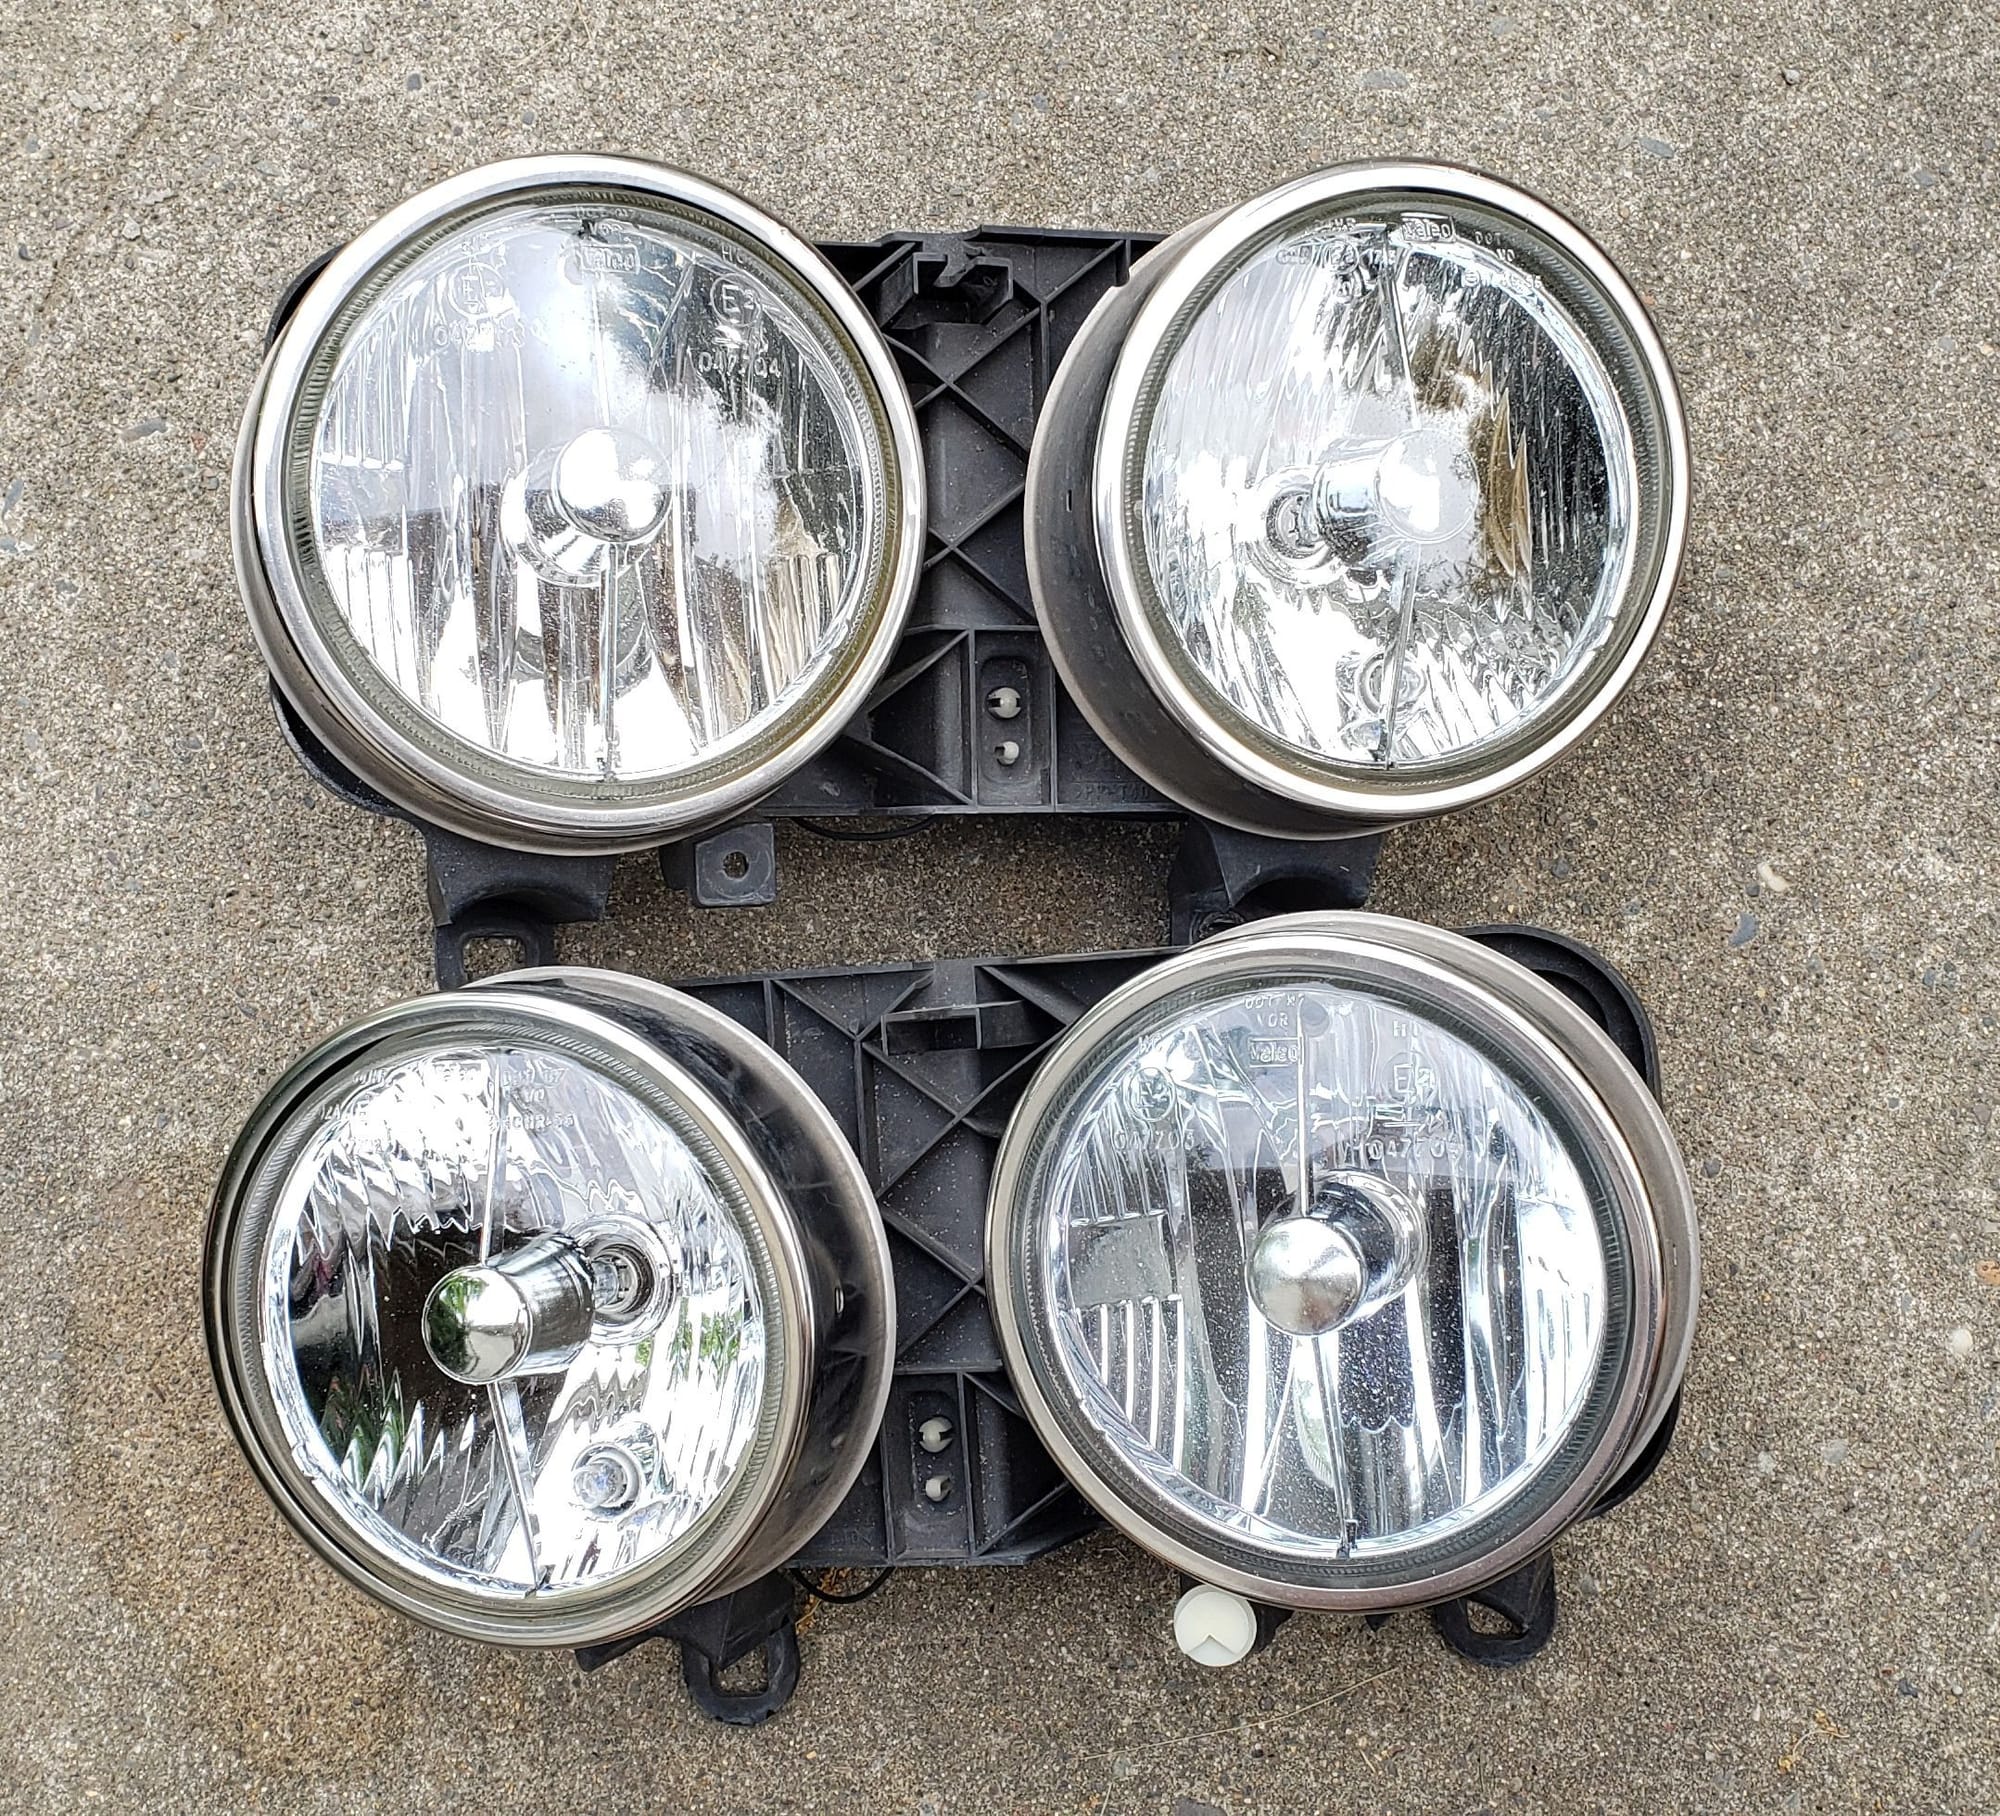 Lights - X308 Head lights + fog light - Used - 1998 to 2003 Jaguar XJR - Sacramento, CA 95821, United States